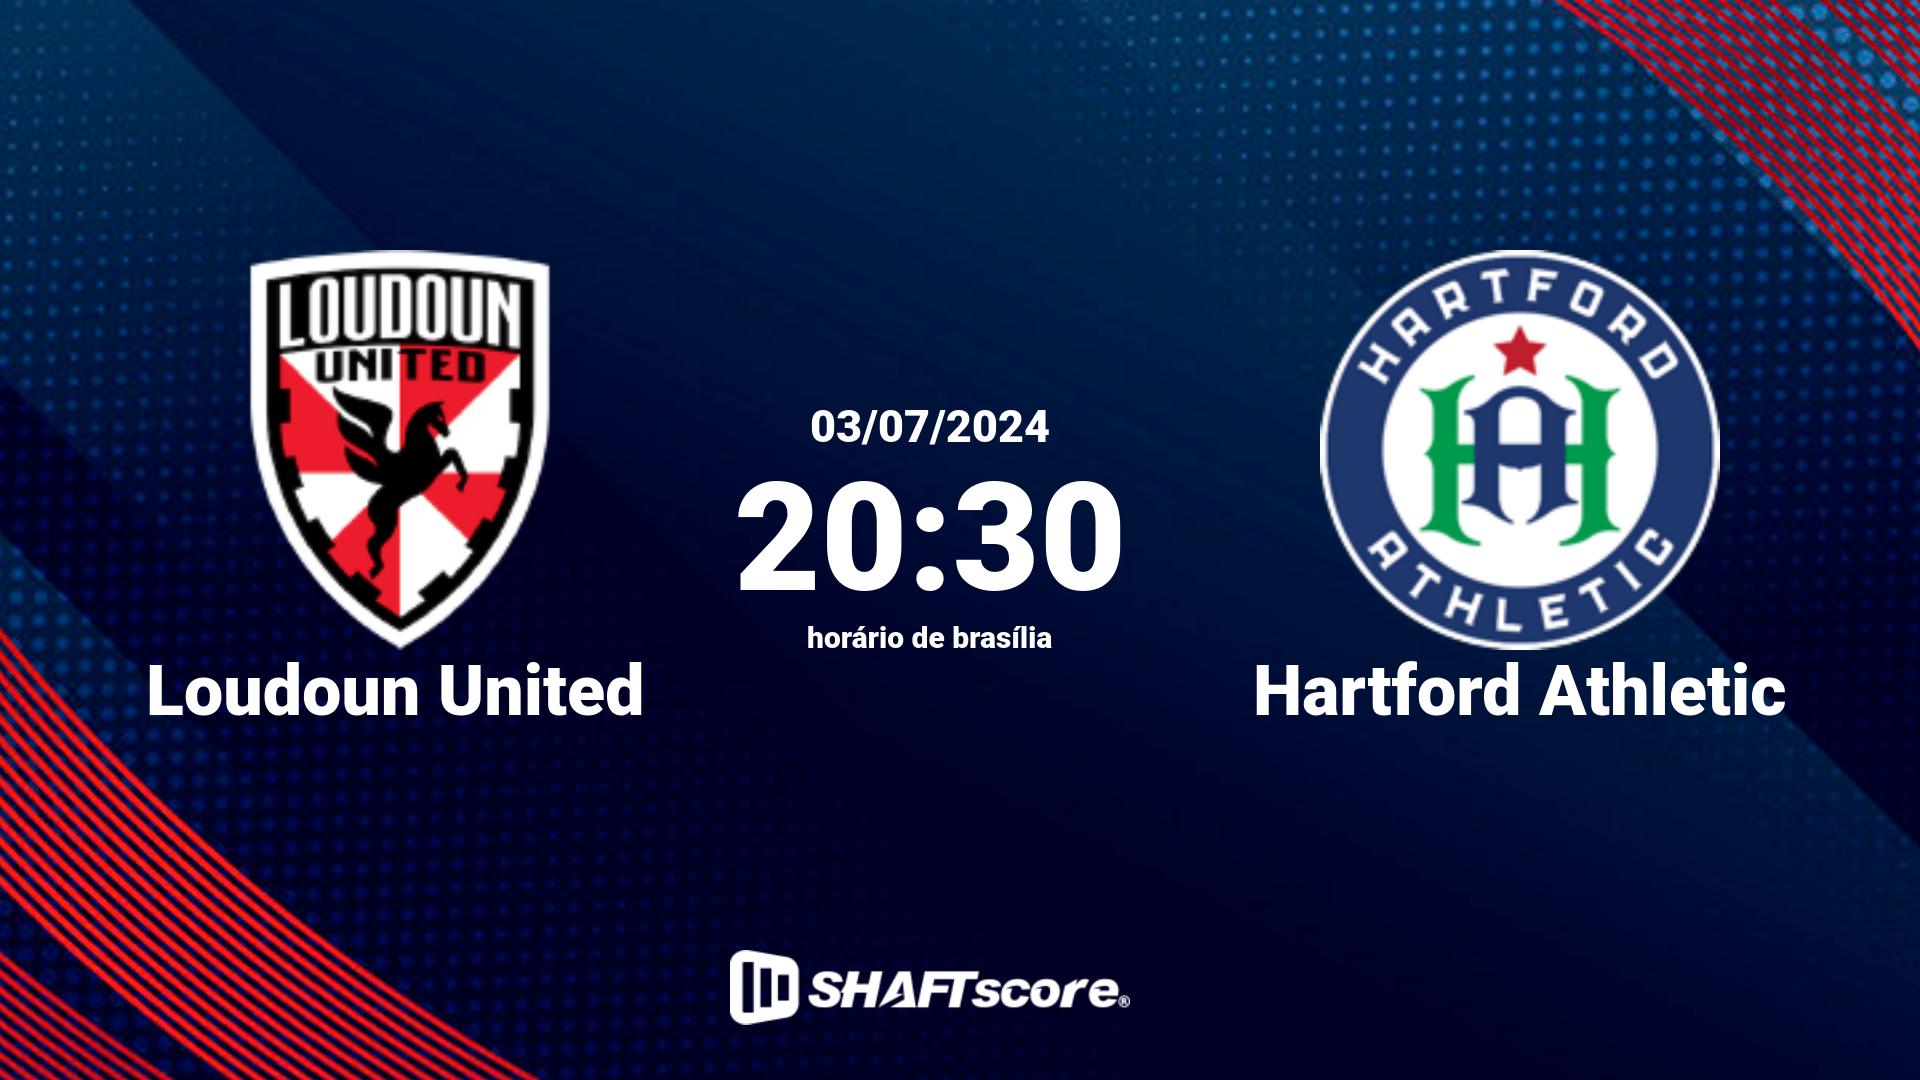 Estatísticas do jogo Loudoun United vs Hartford Athletic 03.07 20:30